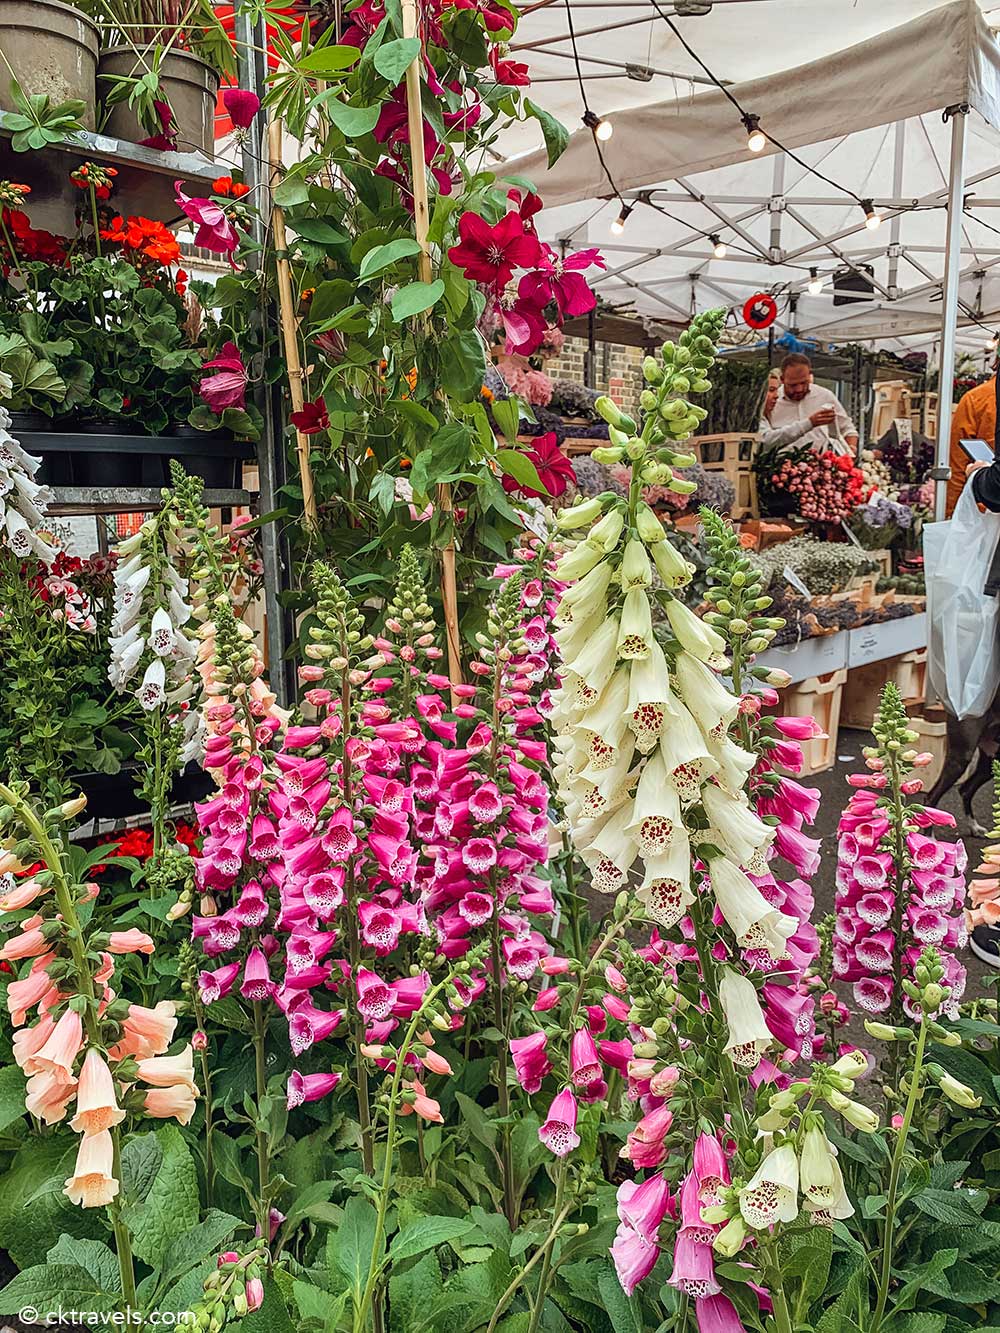 Columbia Road flower market - Instagrammable Places in London - Best Photo Spots